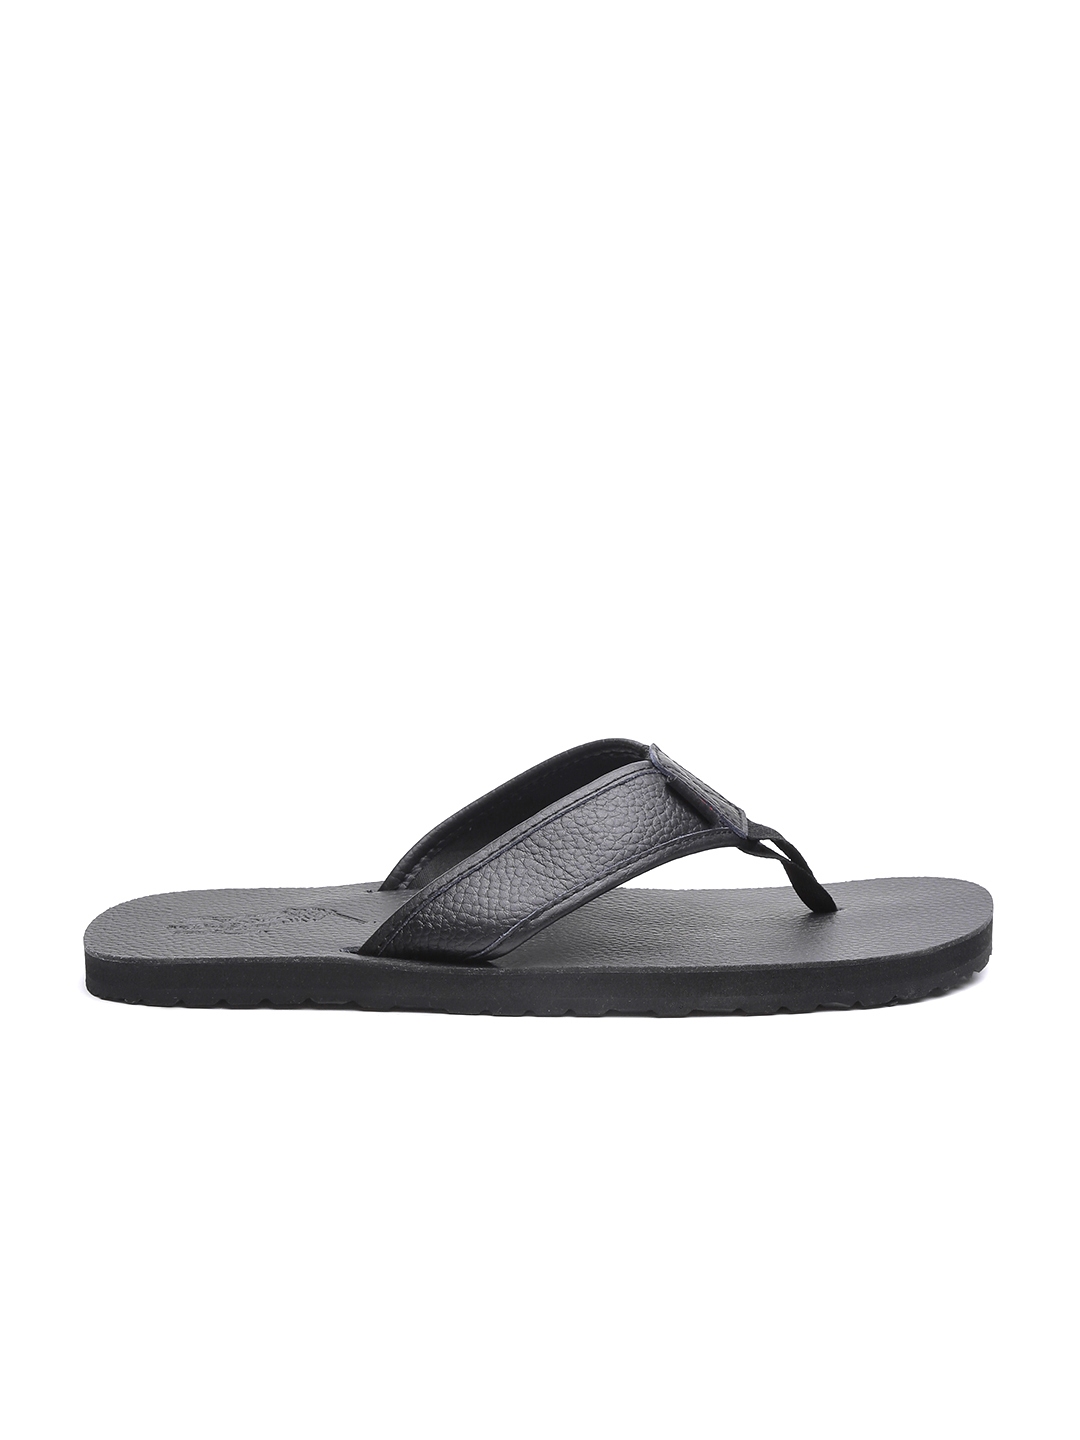 Buy Polo Ralph Lauren Men Black Solid Leather Sandals - Sandals for Men ...